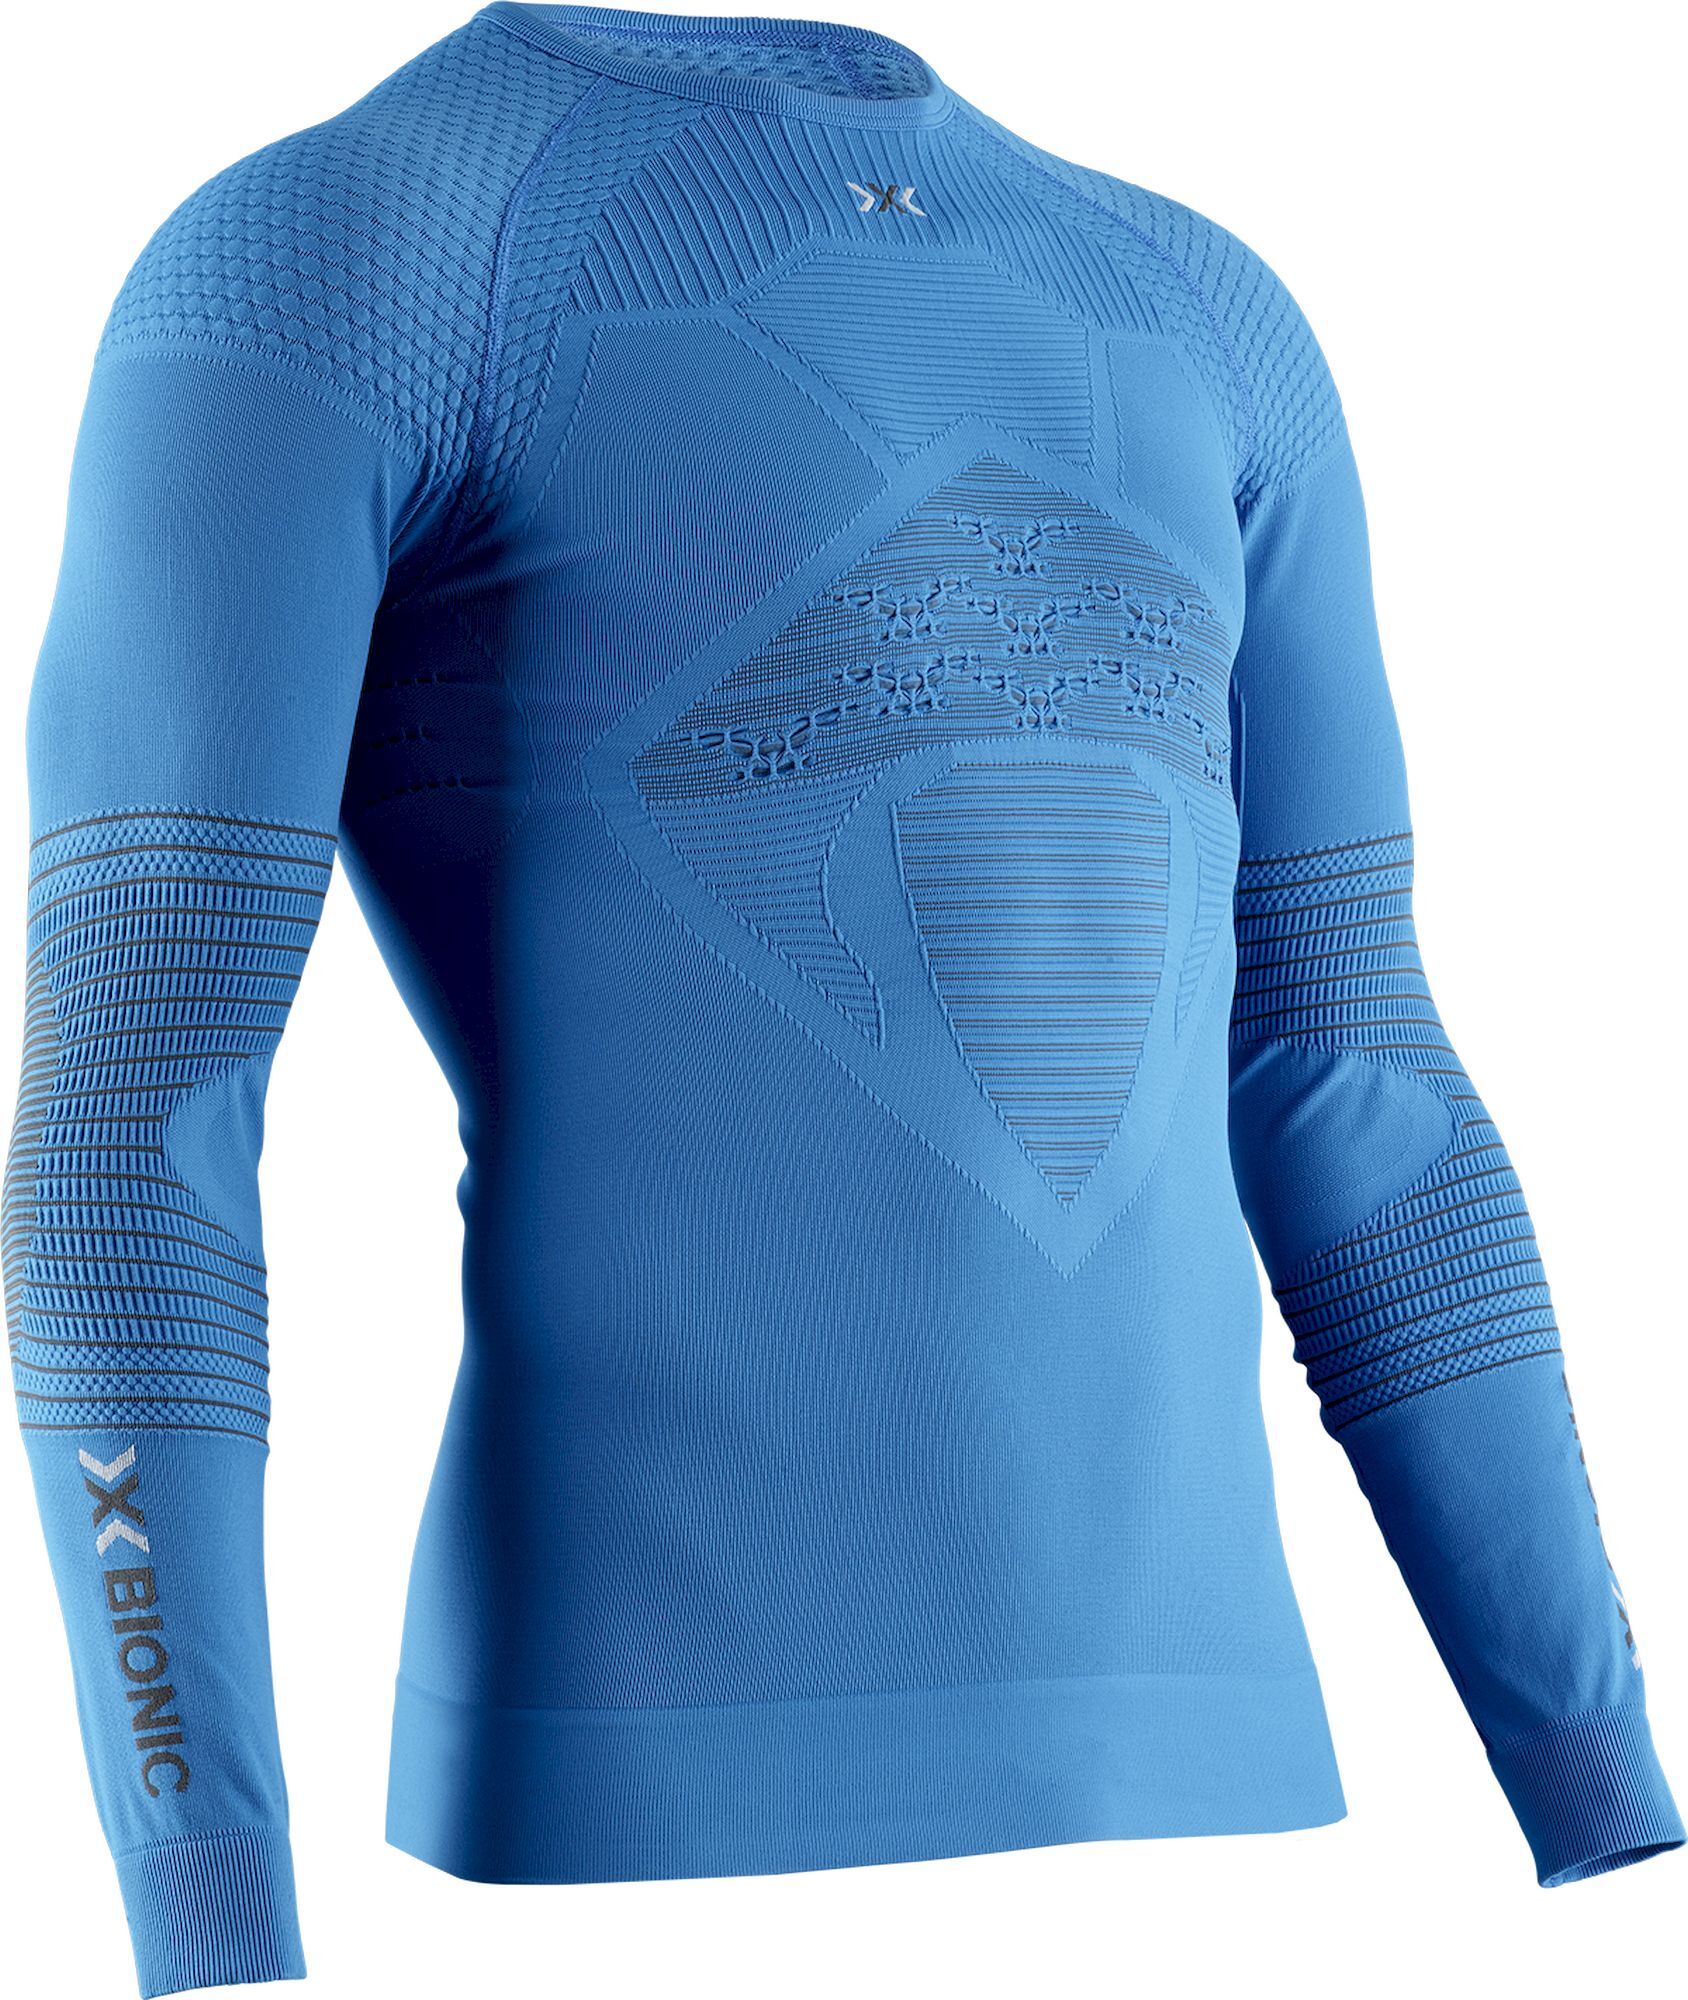 X-Bionic Energizer 4.0 Shirt Long Sleeve - Base layer - Men's